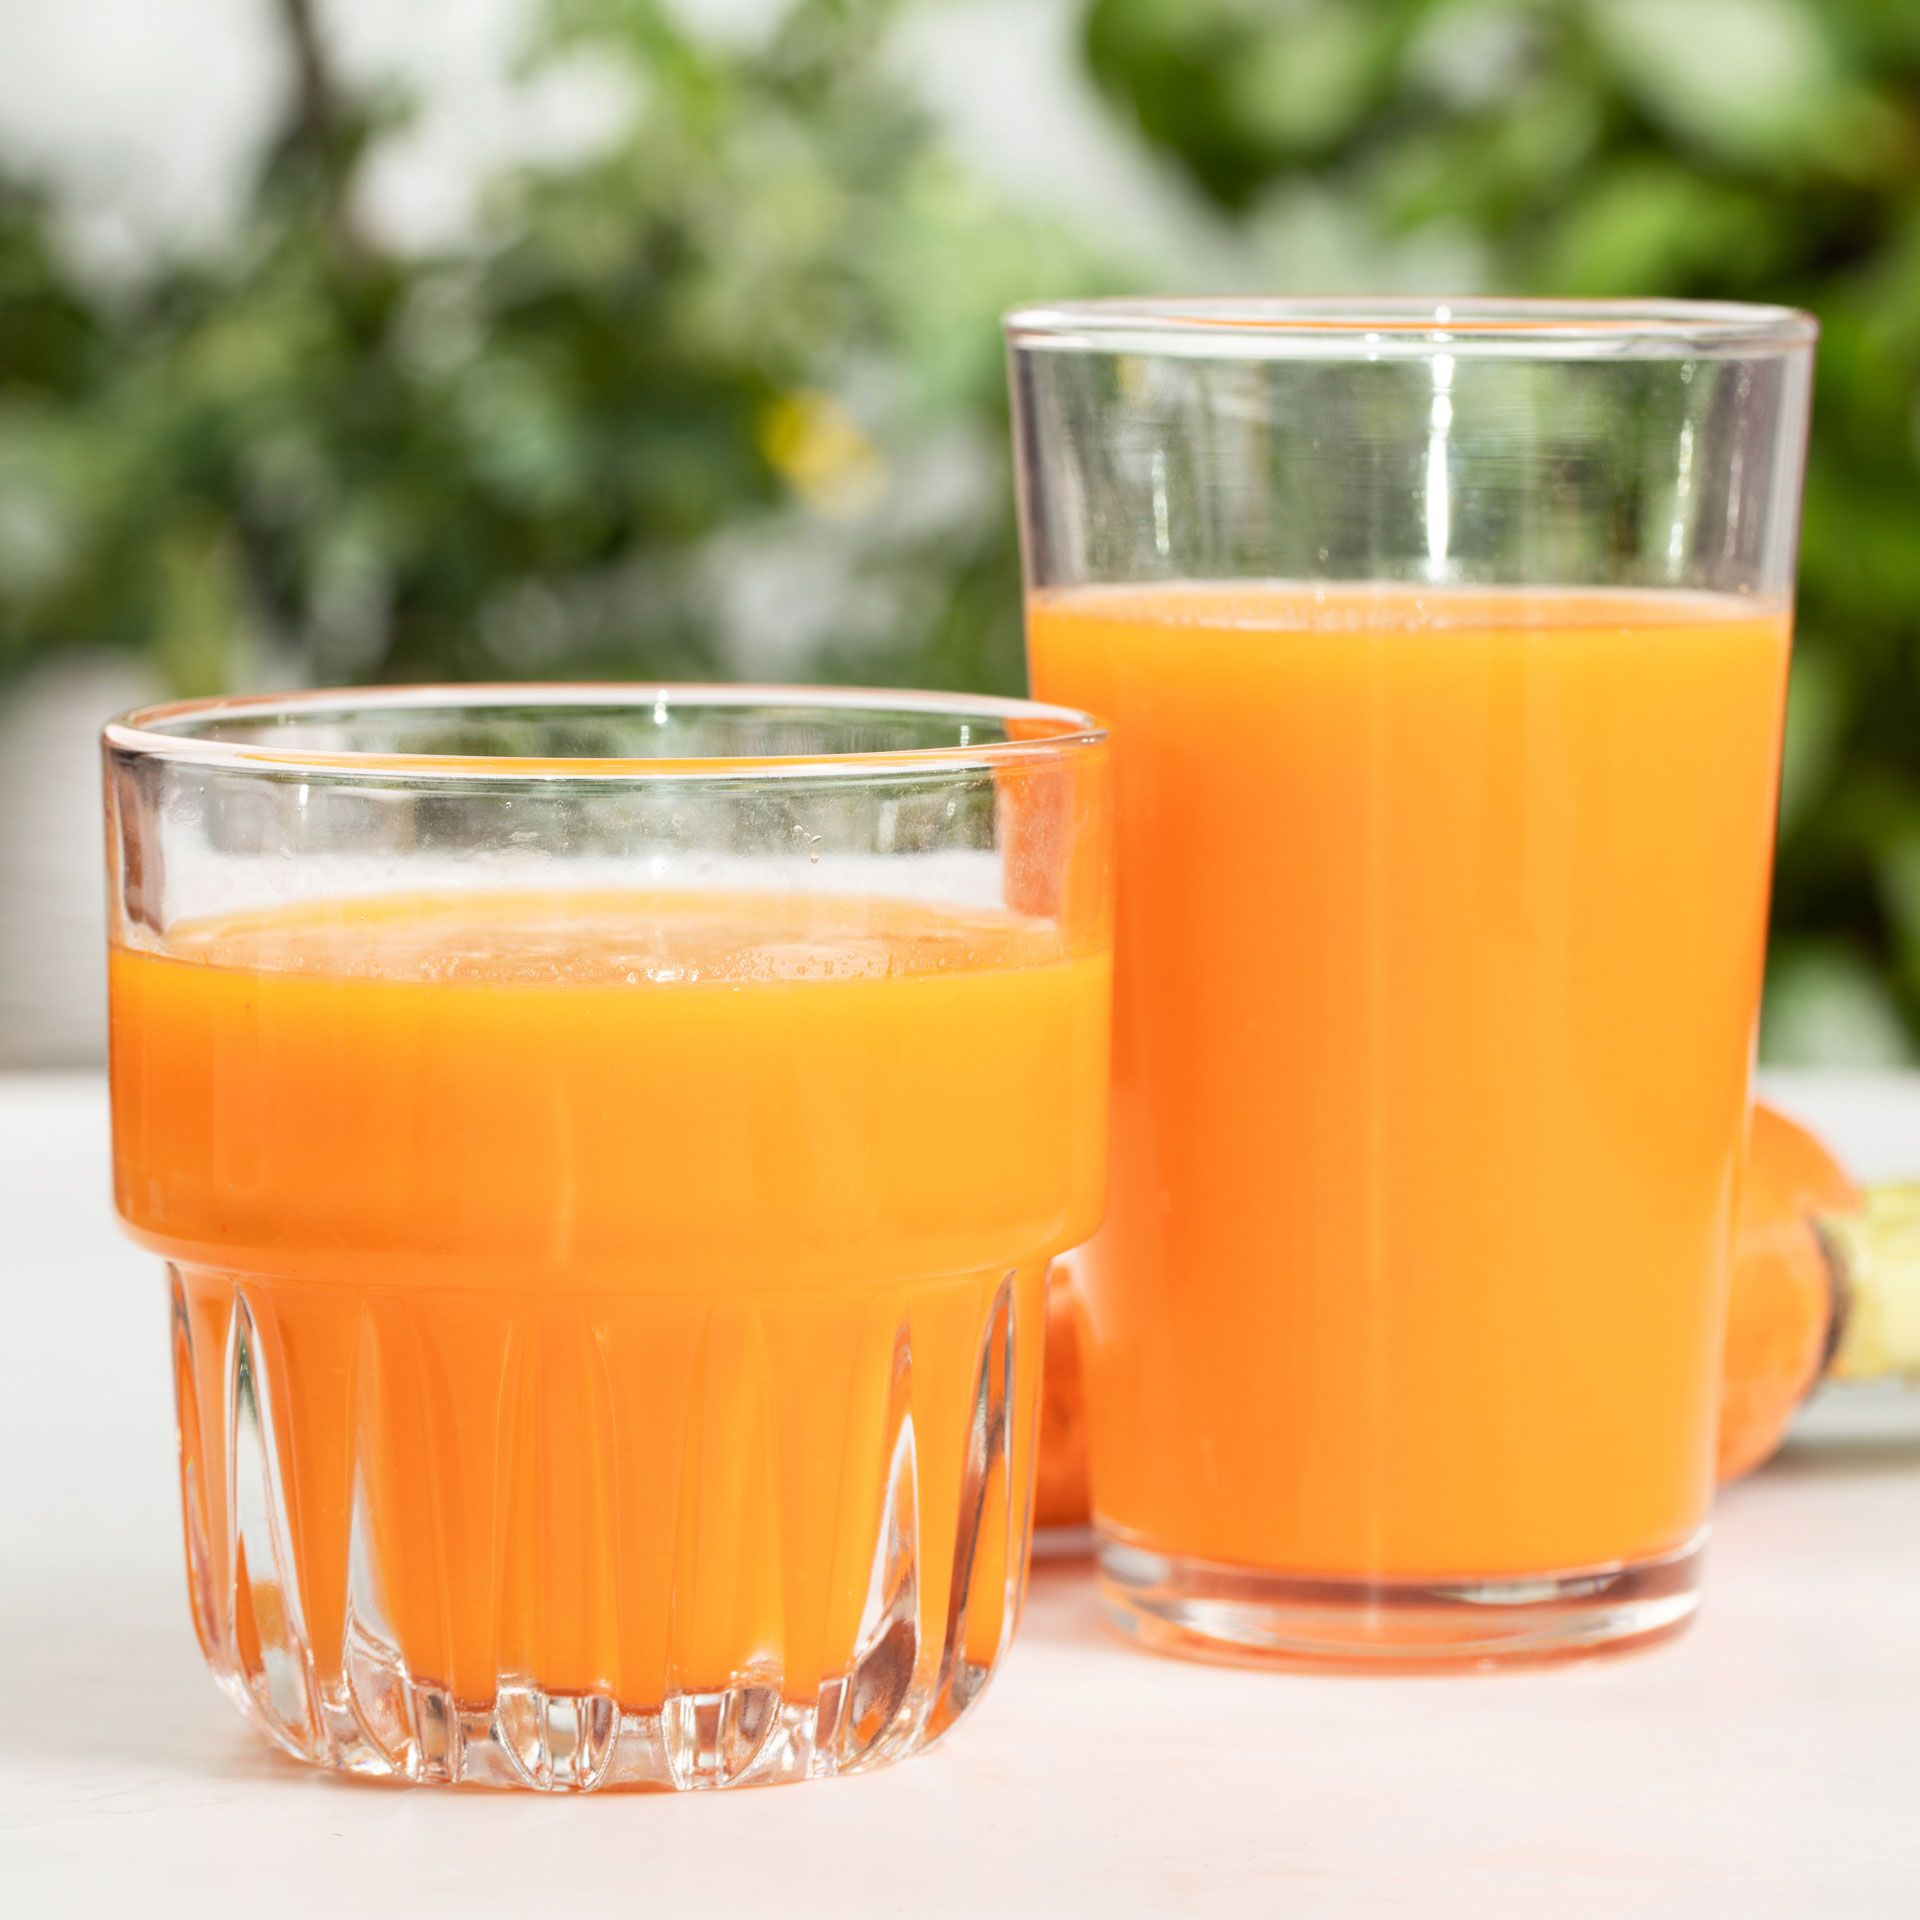 How To Make Fresh Carrot Juice By Hand From Tolikara City